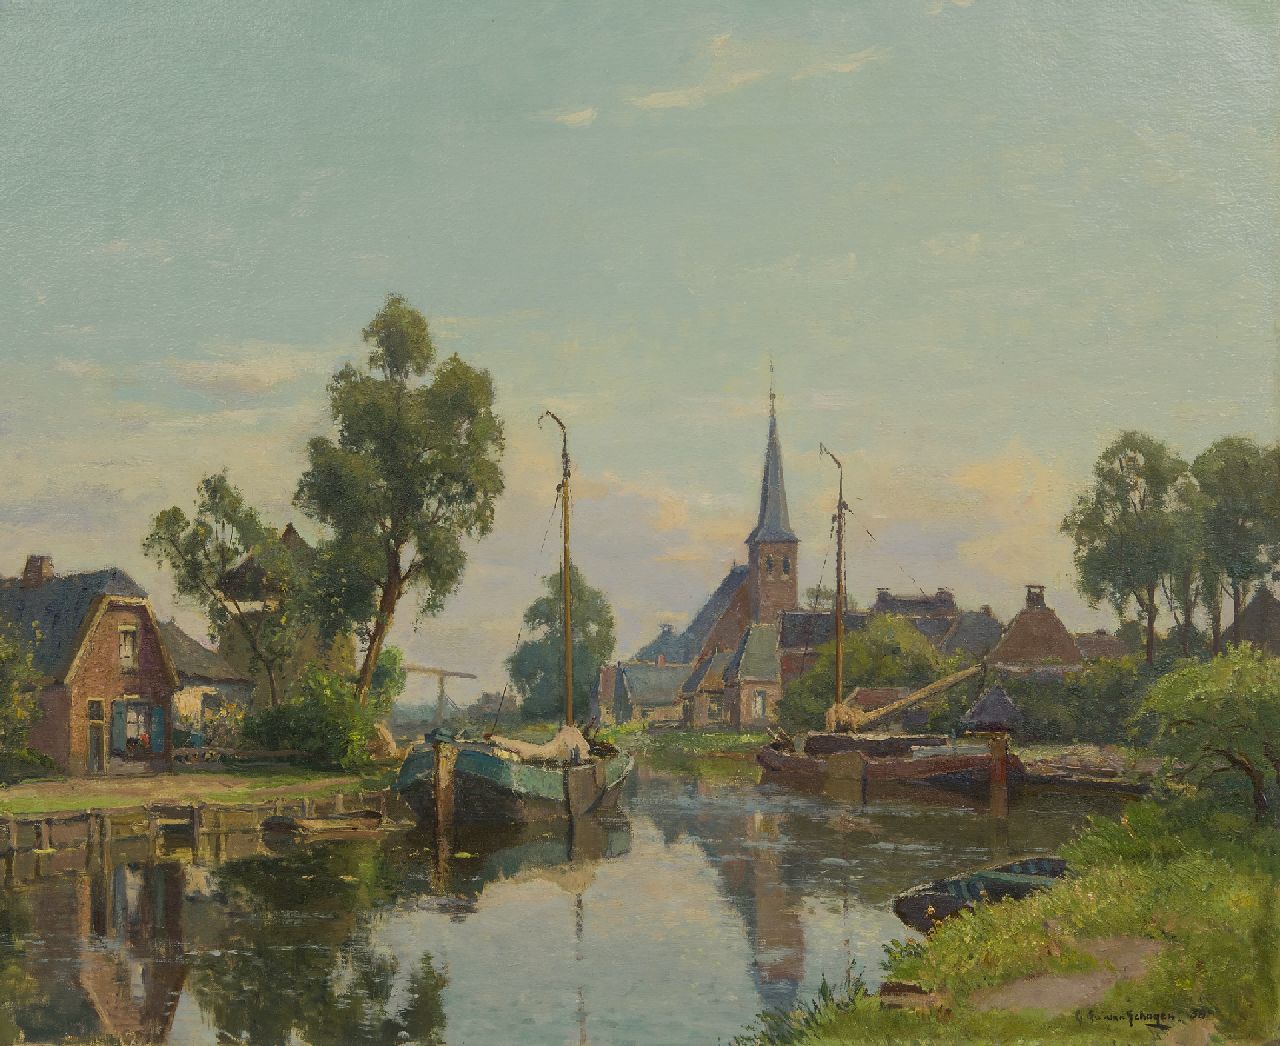 Schagen G.F. van | Gerbrand Frederik van Schagen, A view of Wartena, Friesland, oil on canvas 70.7 x 86.2 cm, signed l.r. and dated '38